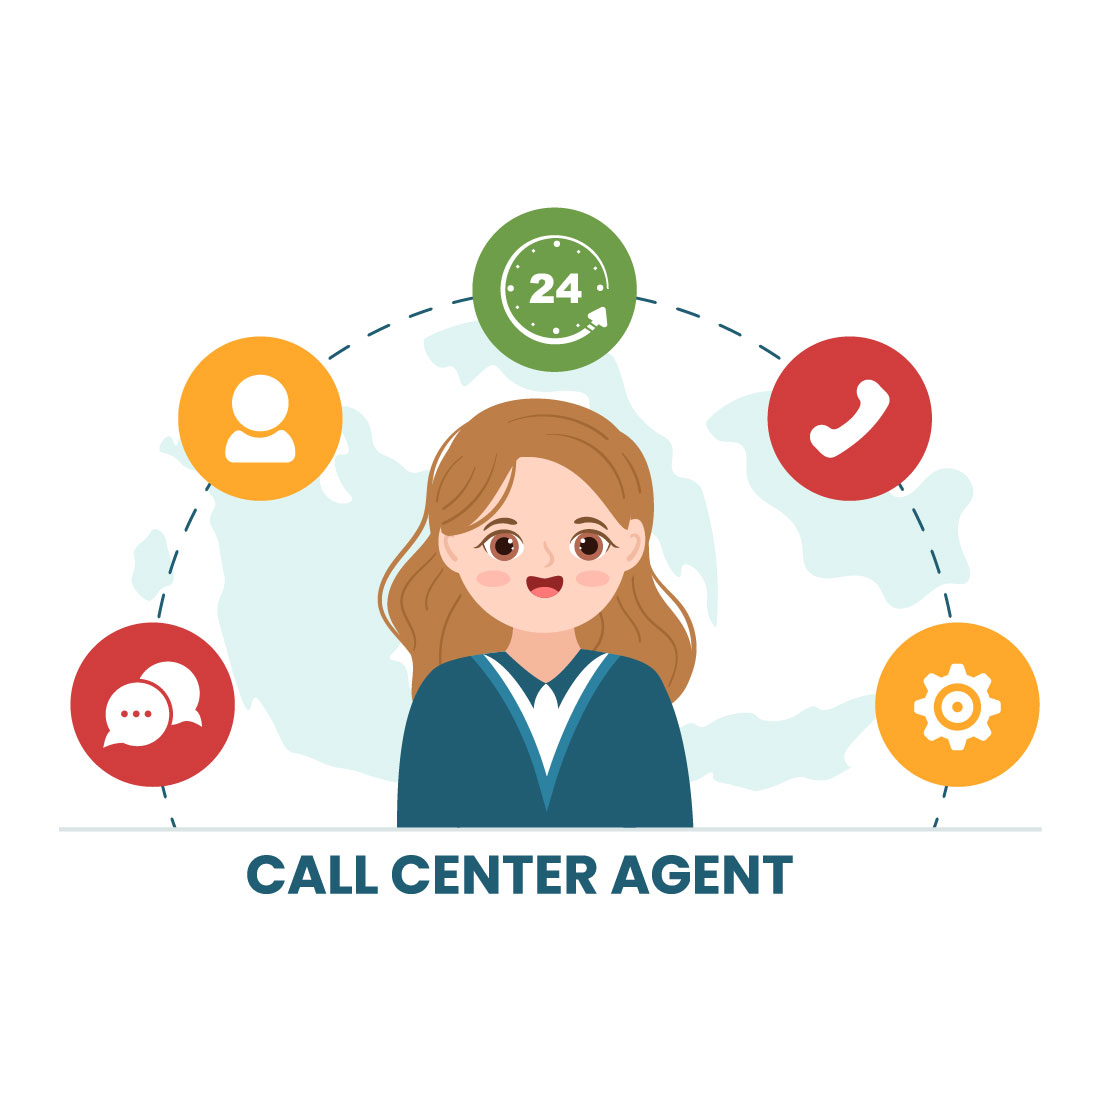 Call Center Agent Design Illustration cover image.